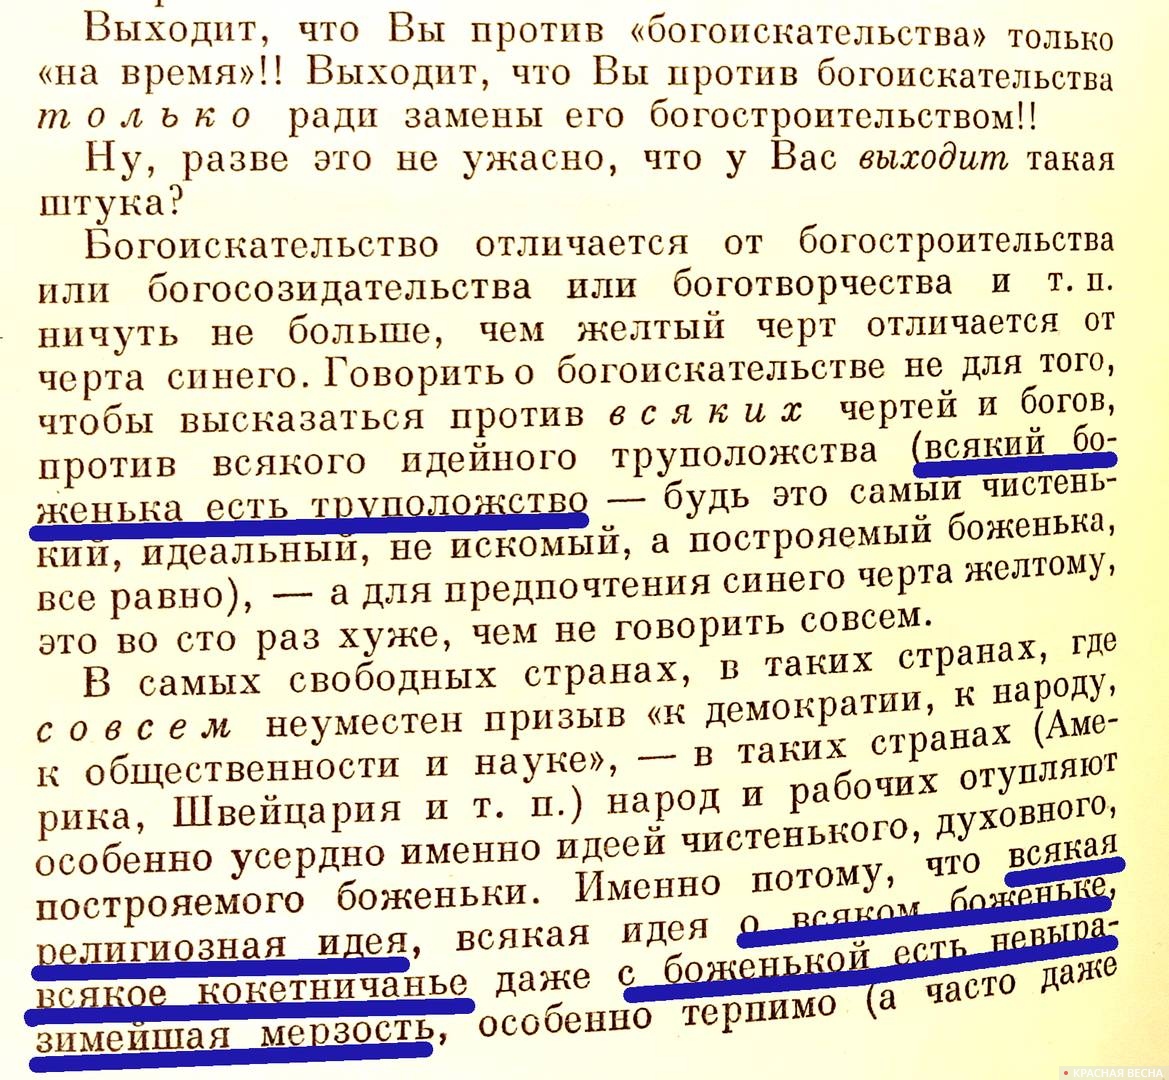 ПСС В.И.Ленина, Том 48, стр. 226 (фрагмент)